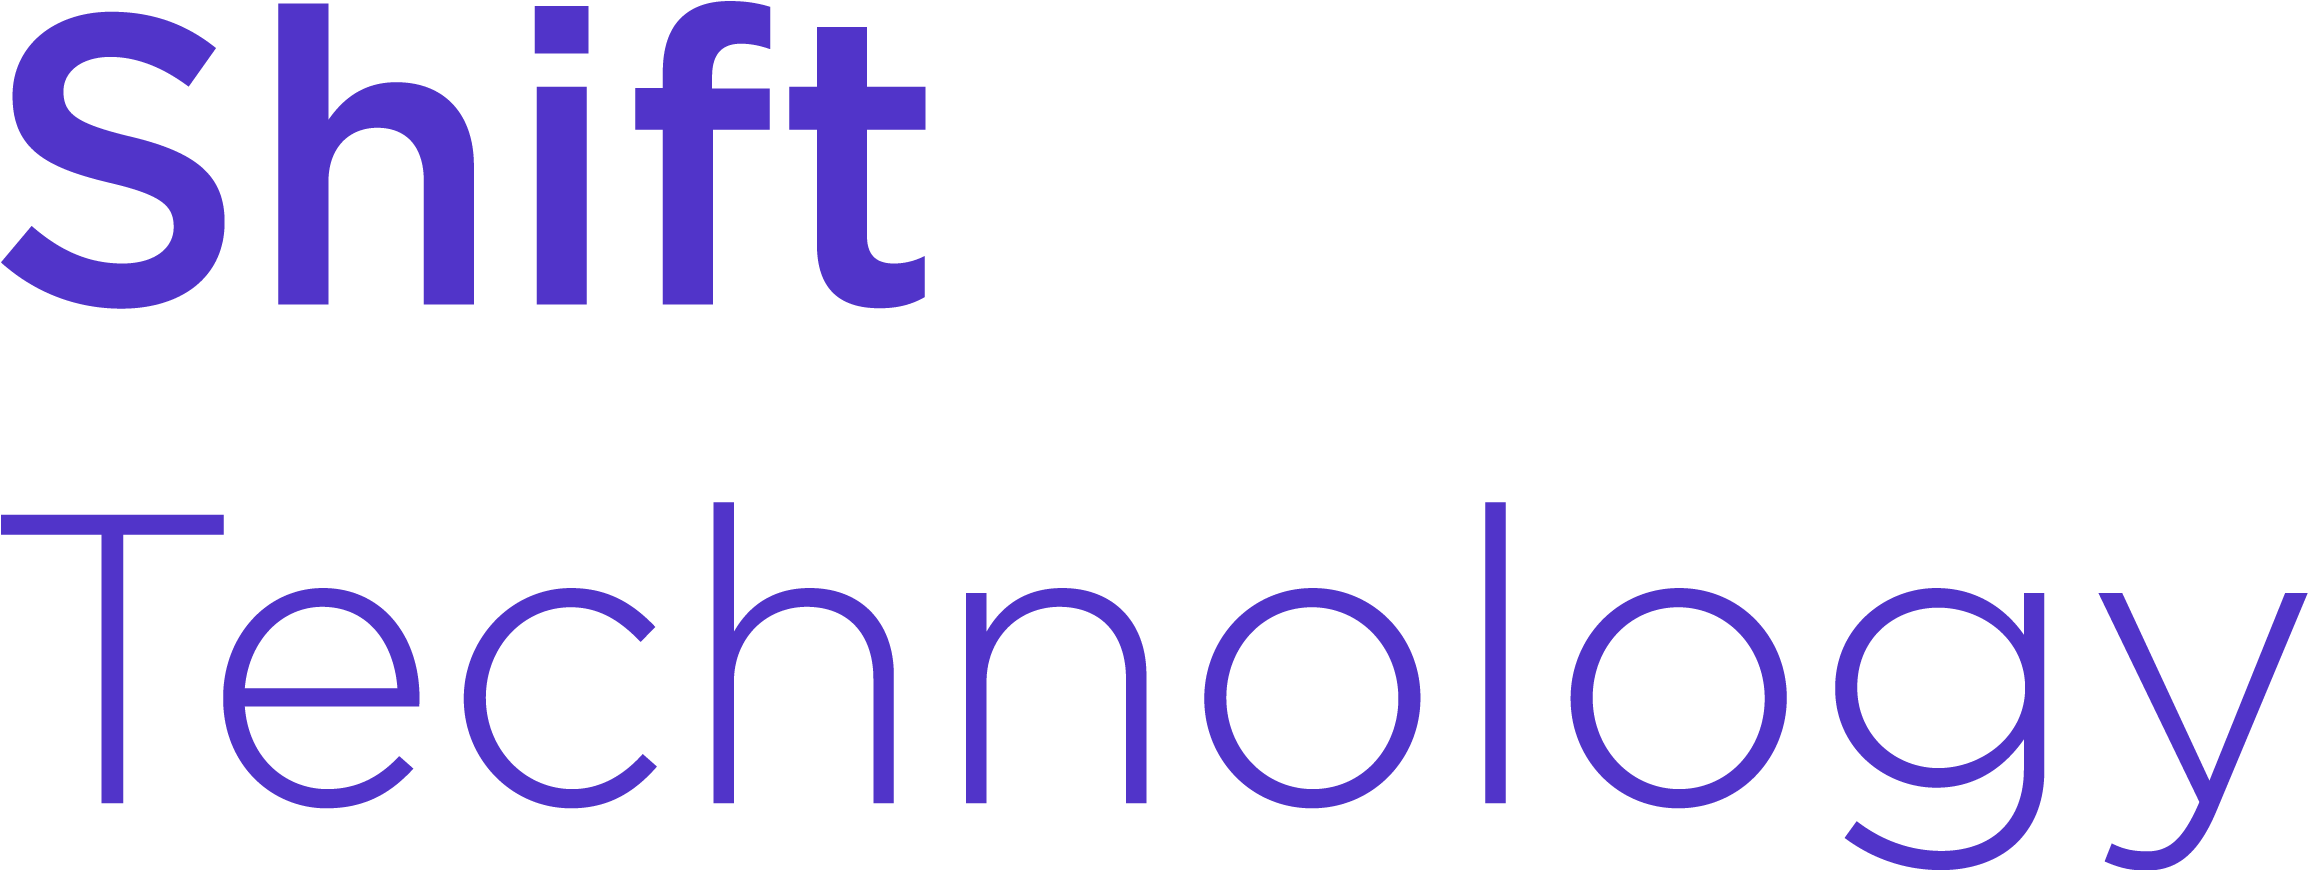 Shift technologies. Shift Technology. Shift Technology logo. Shift logo. AG-Tech logo PNG.